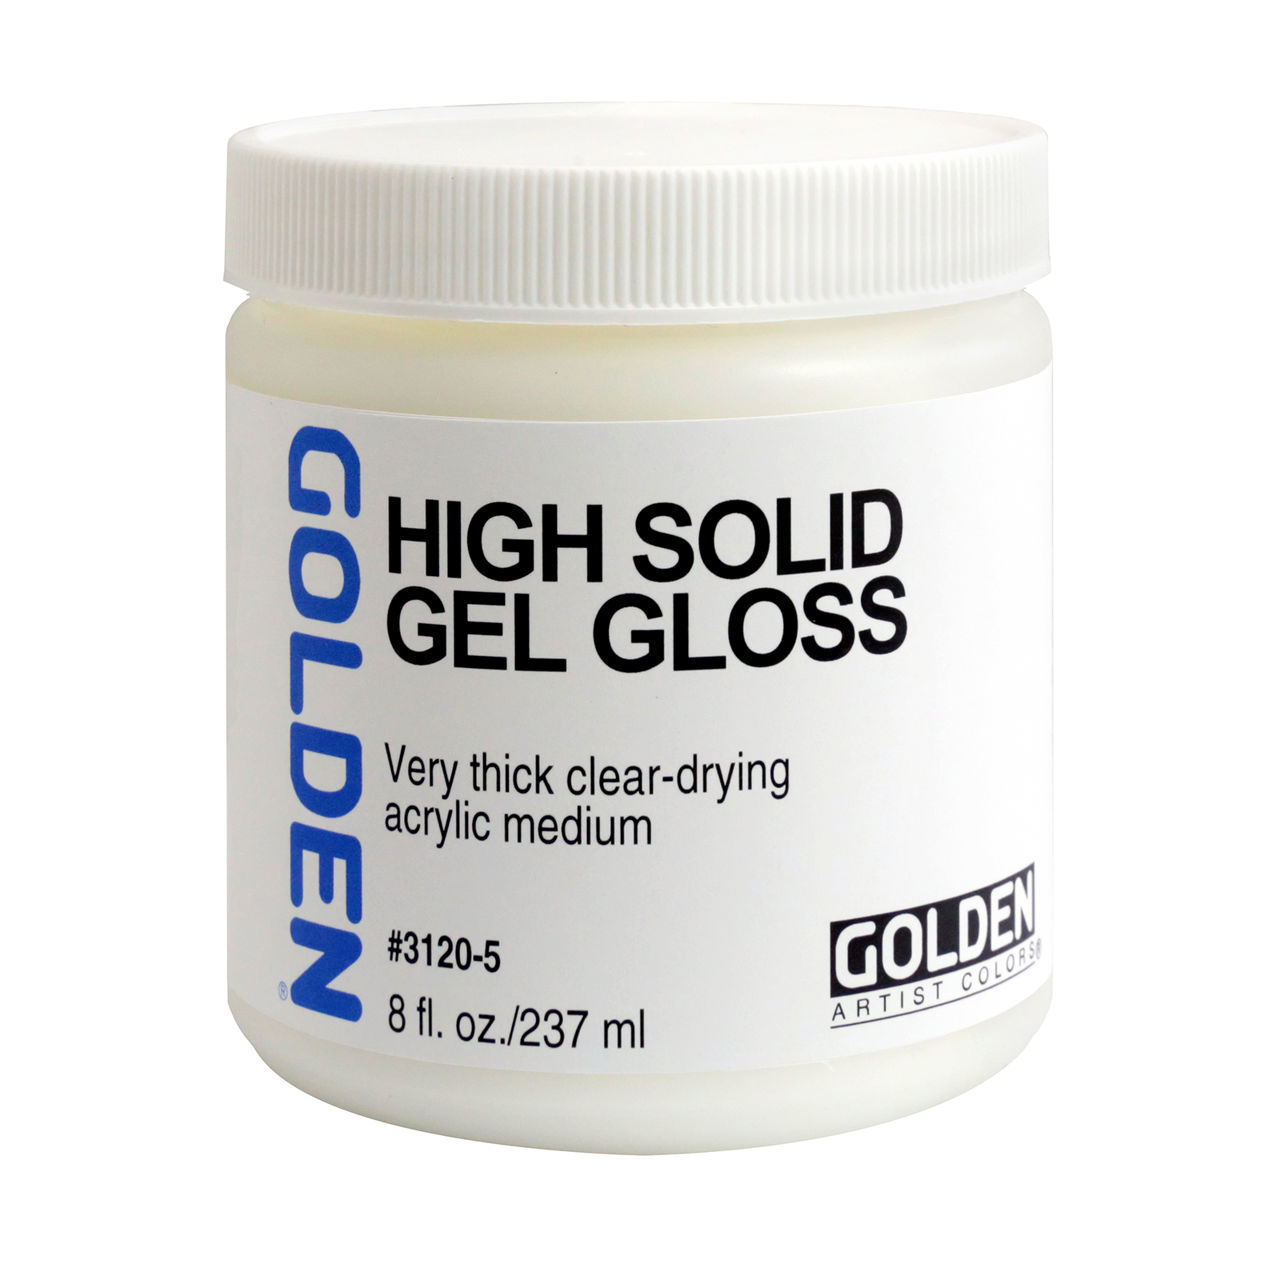 Golden Open Acrylic Gel Medium (Gloss) 8 oz